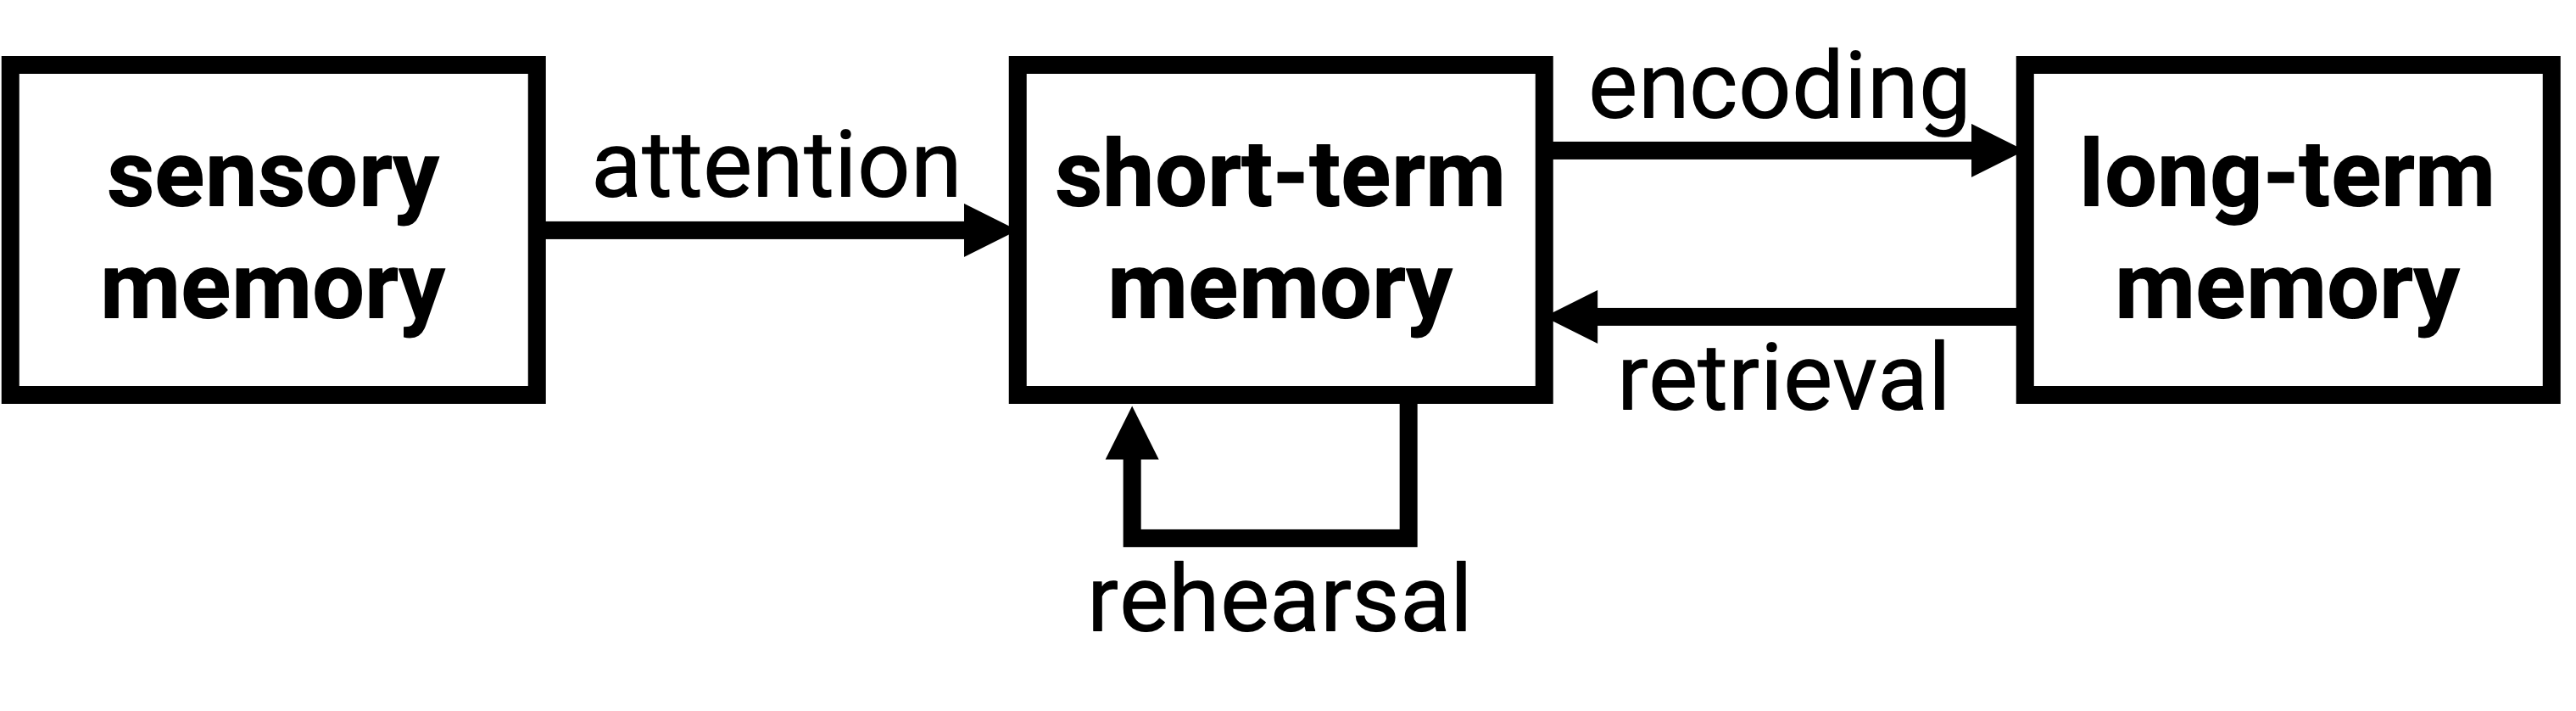 Atkinson and Shiffrin’s Modal Model of Memory.